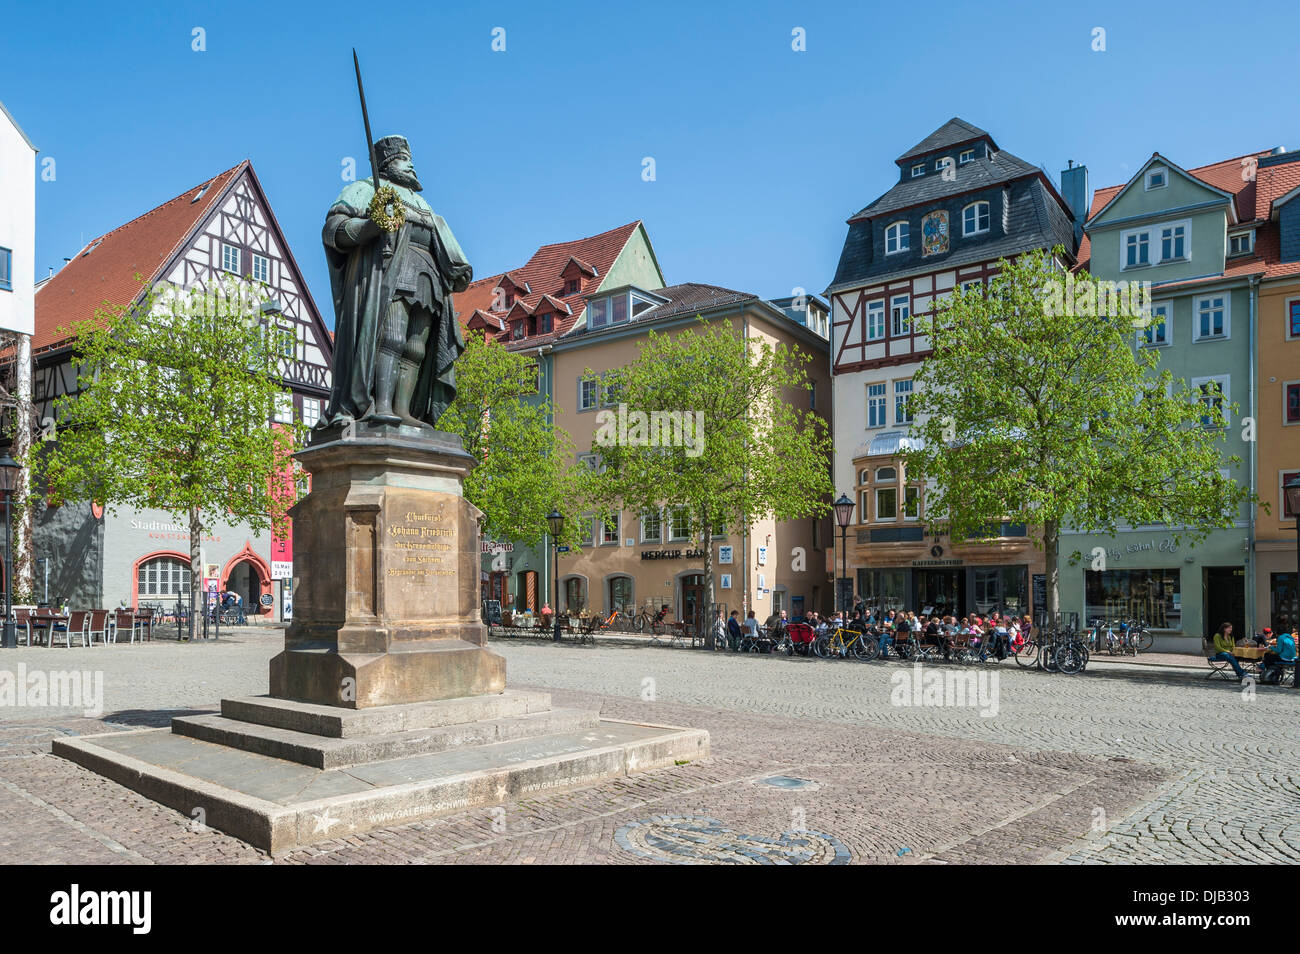 John Frederick I, Elector of Saxony, Monument by F. Drake, Market Square, Jena, Thuringia, Germany Stock Photo